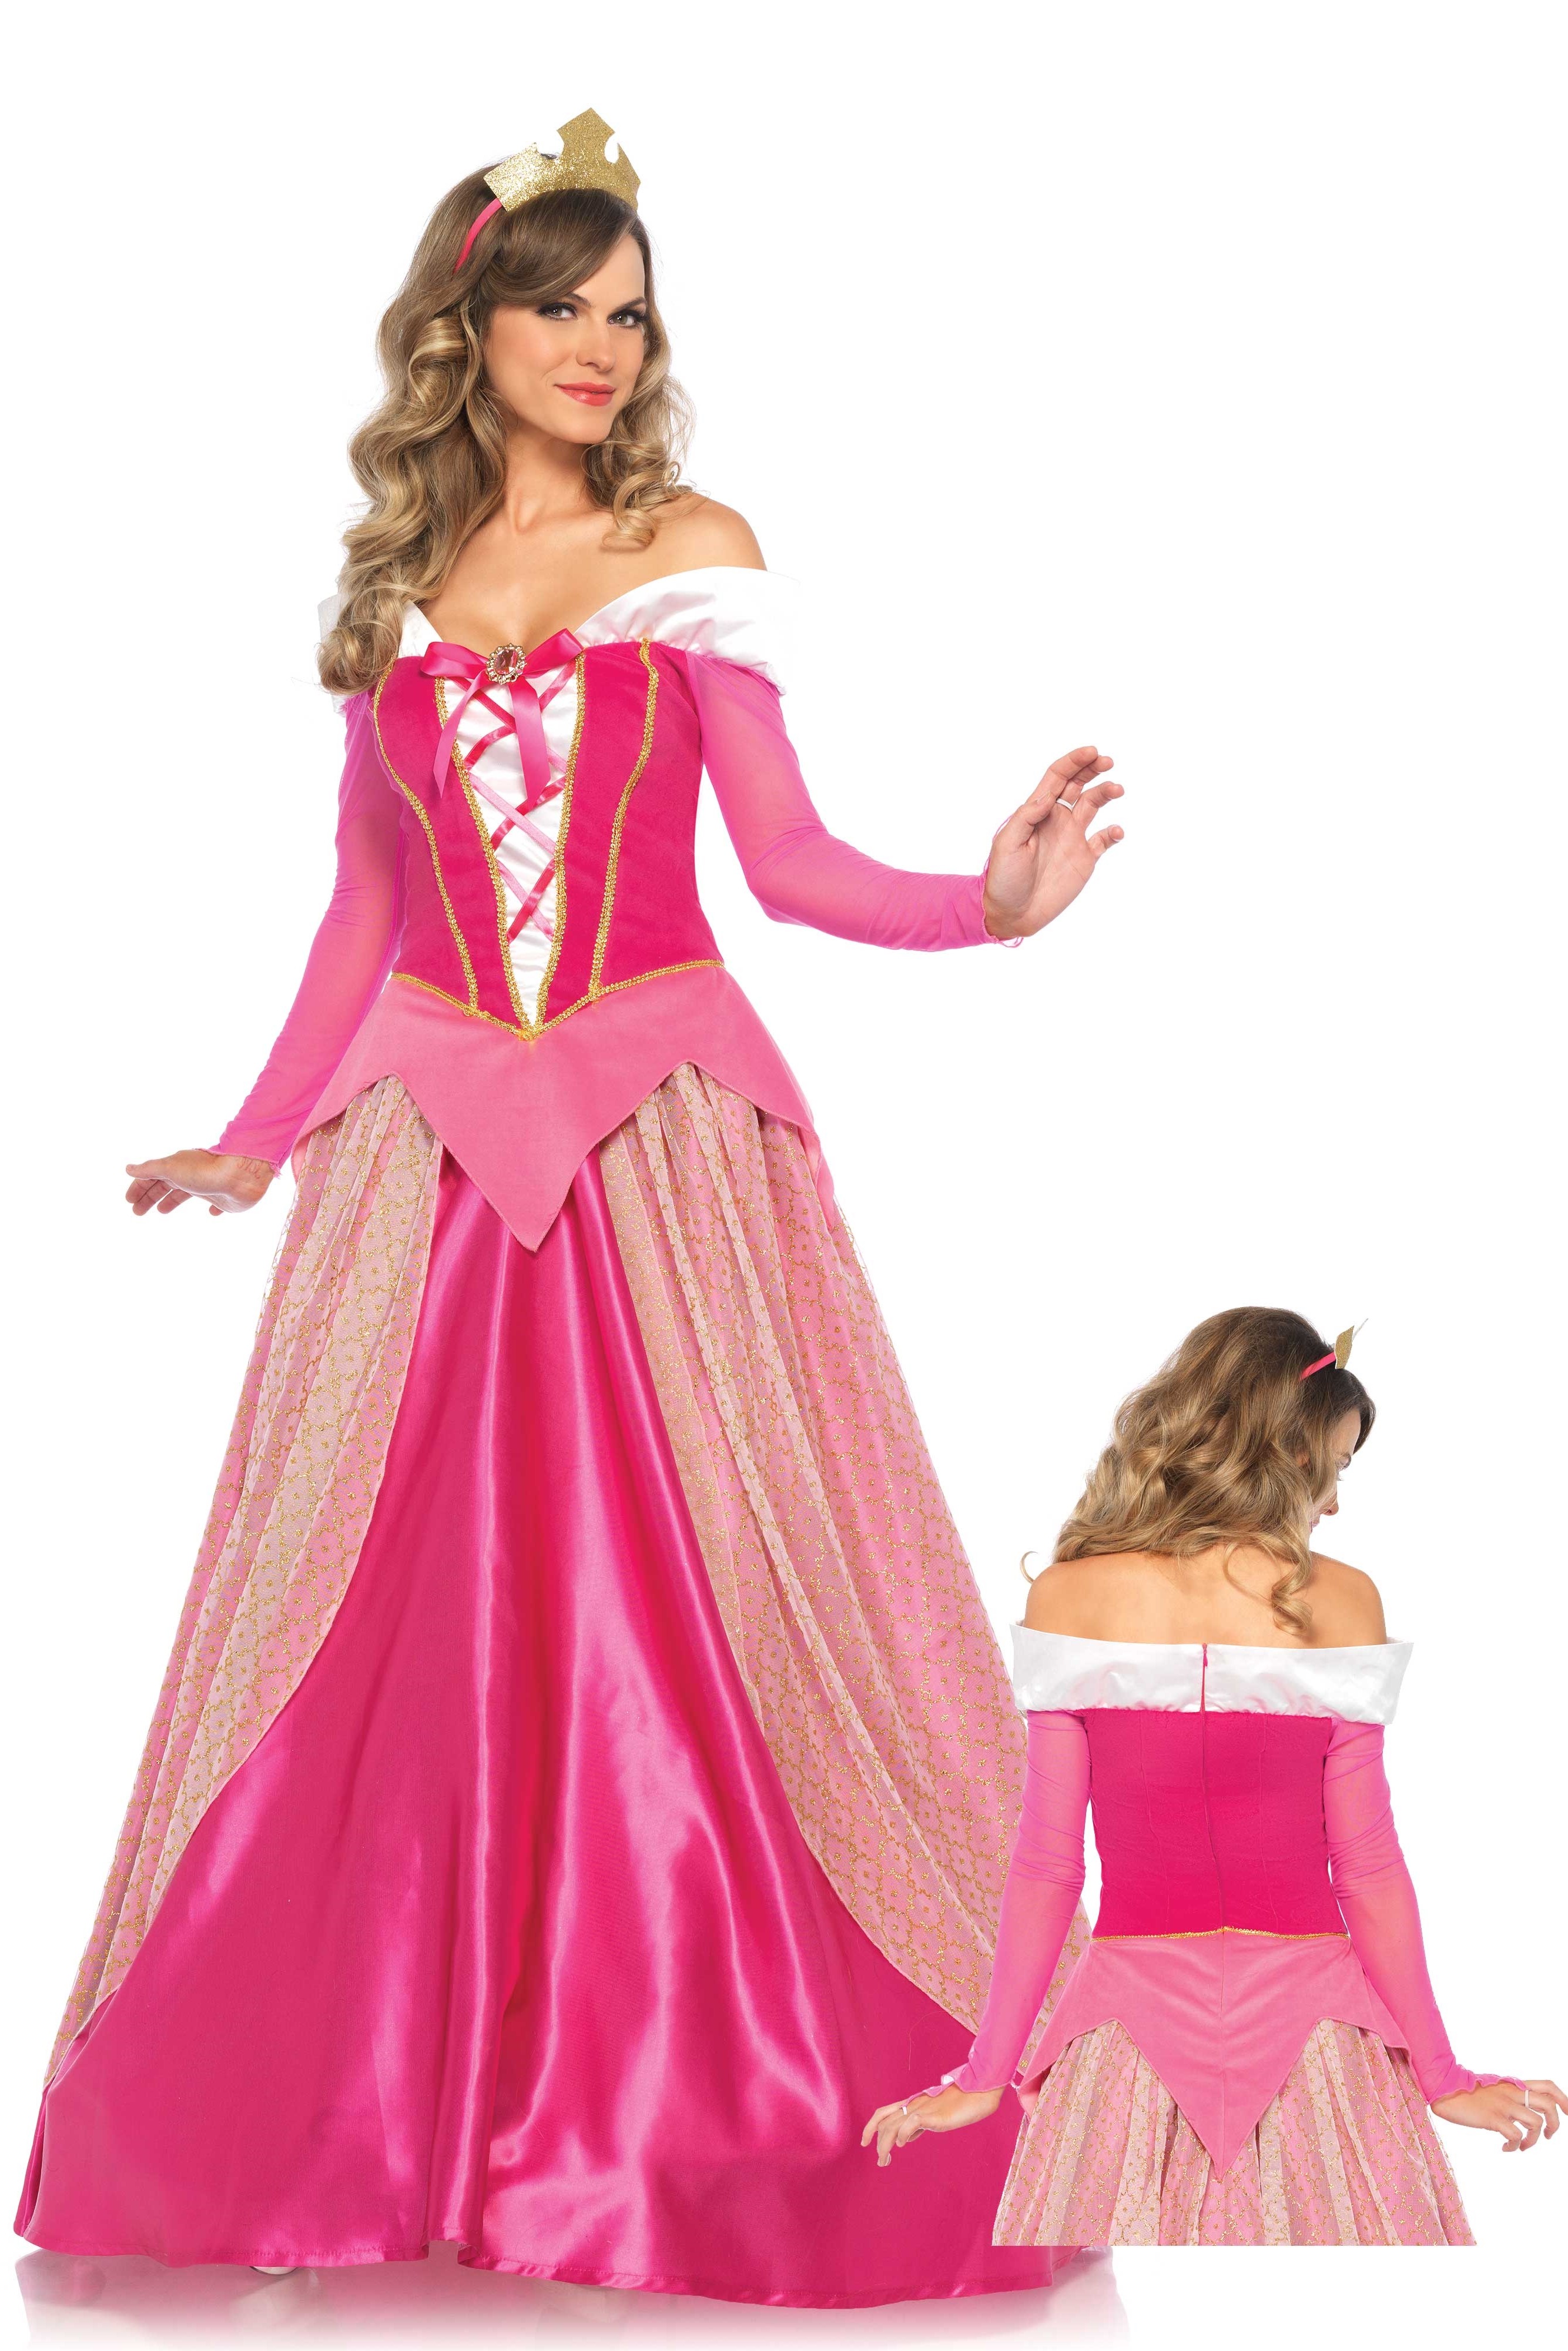 Costume Luxe Princesse Aurore